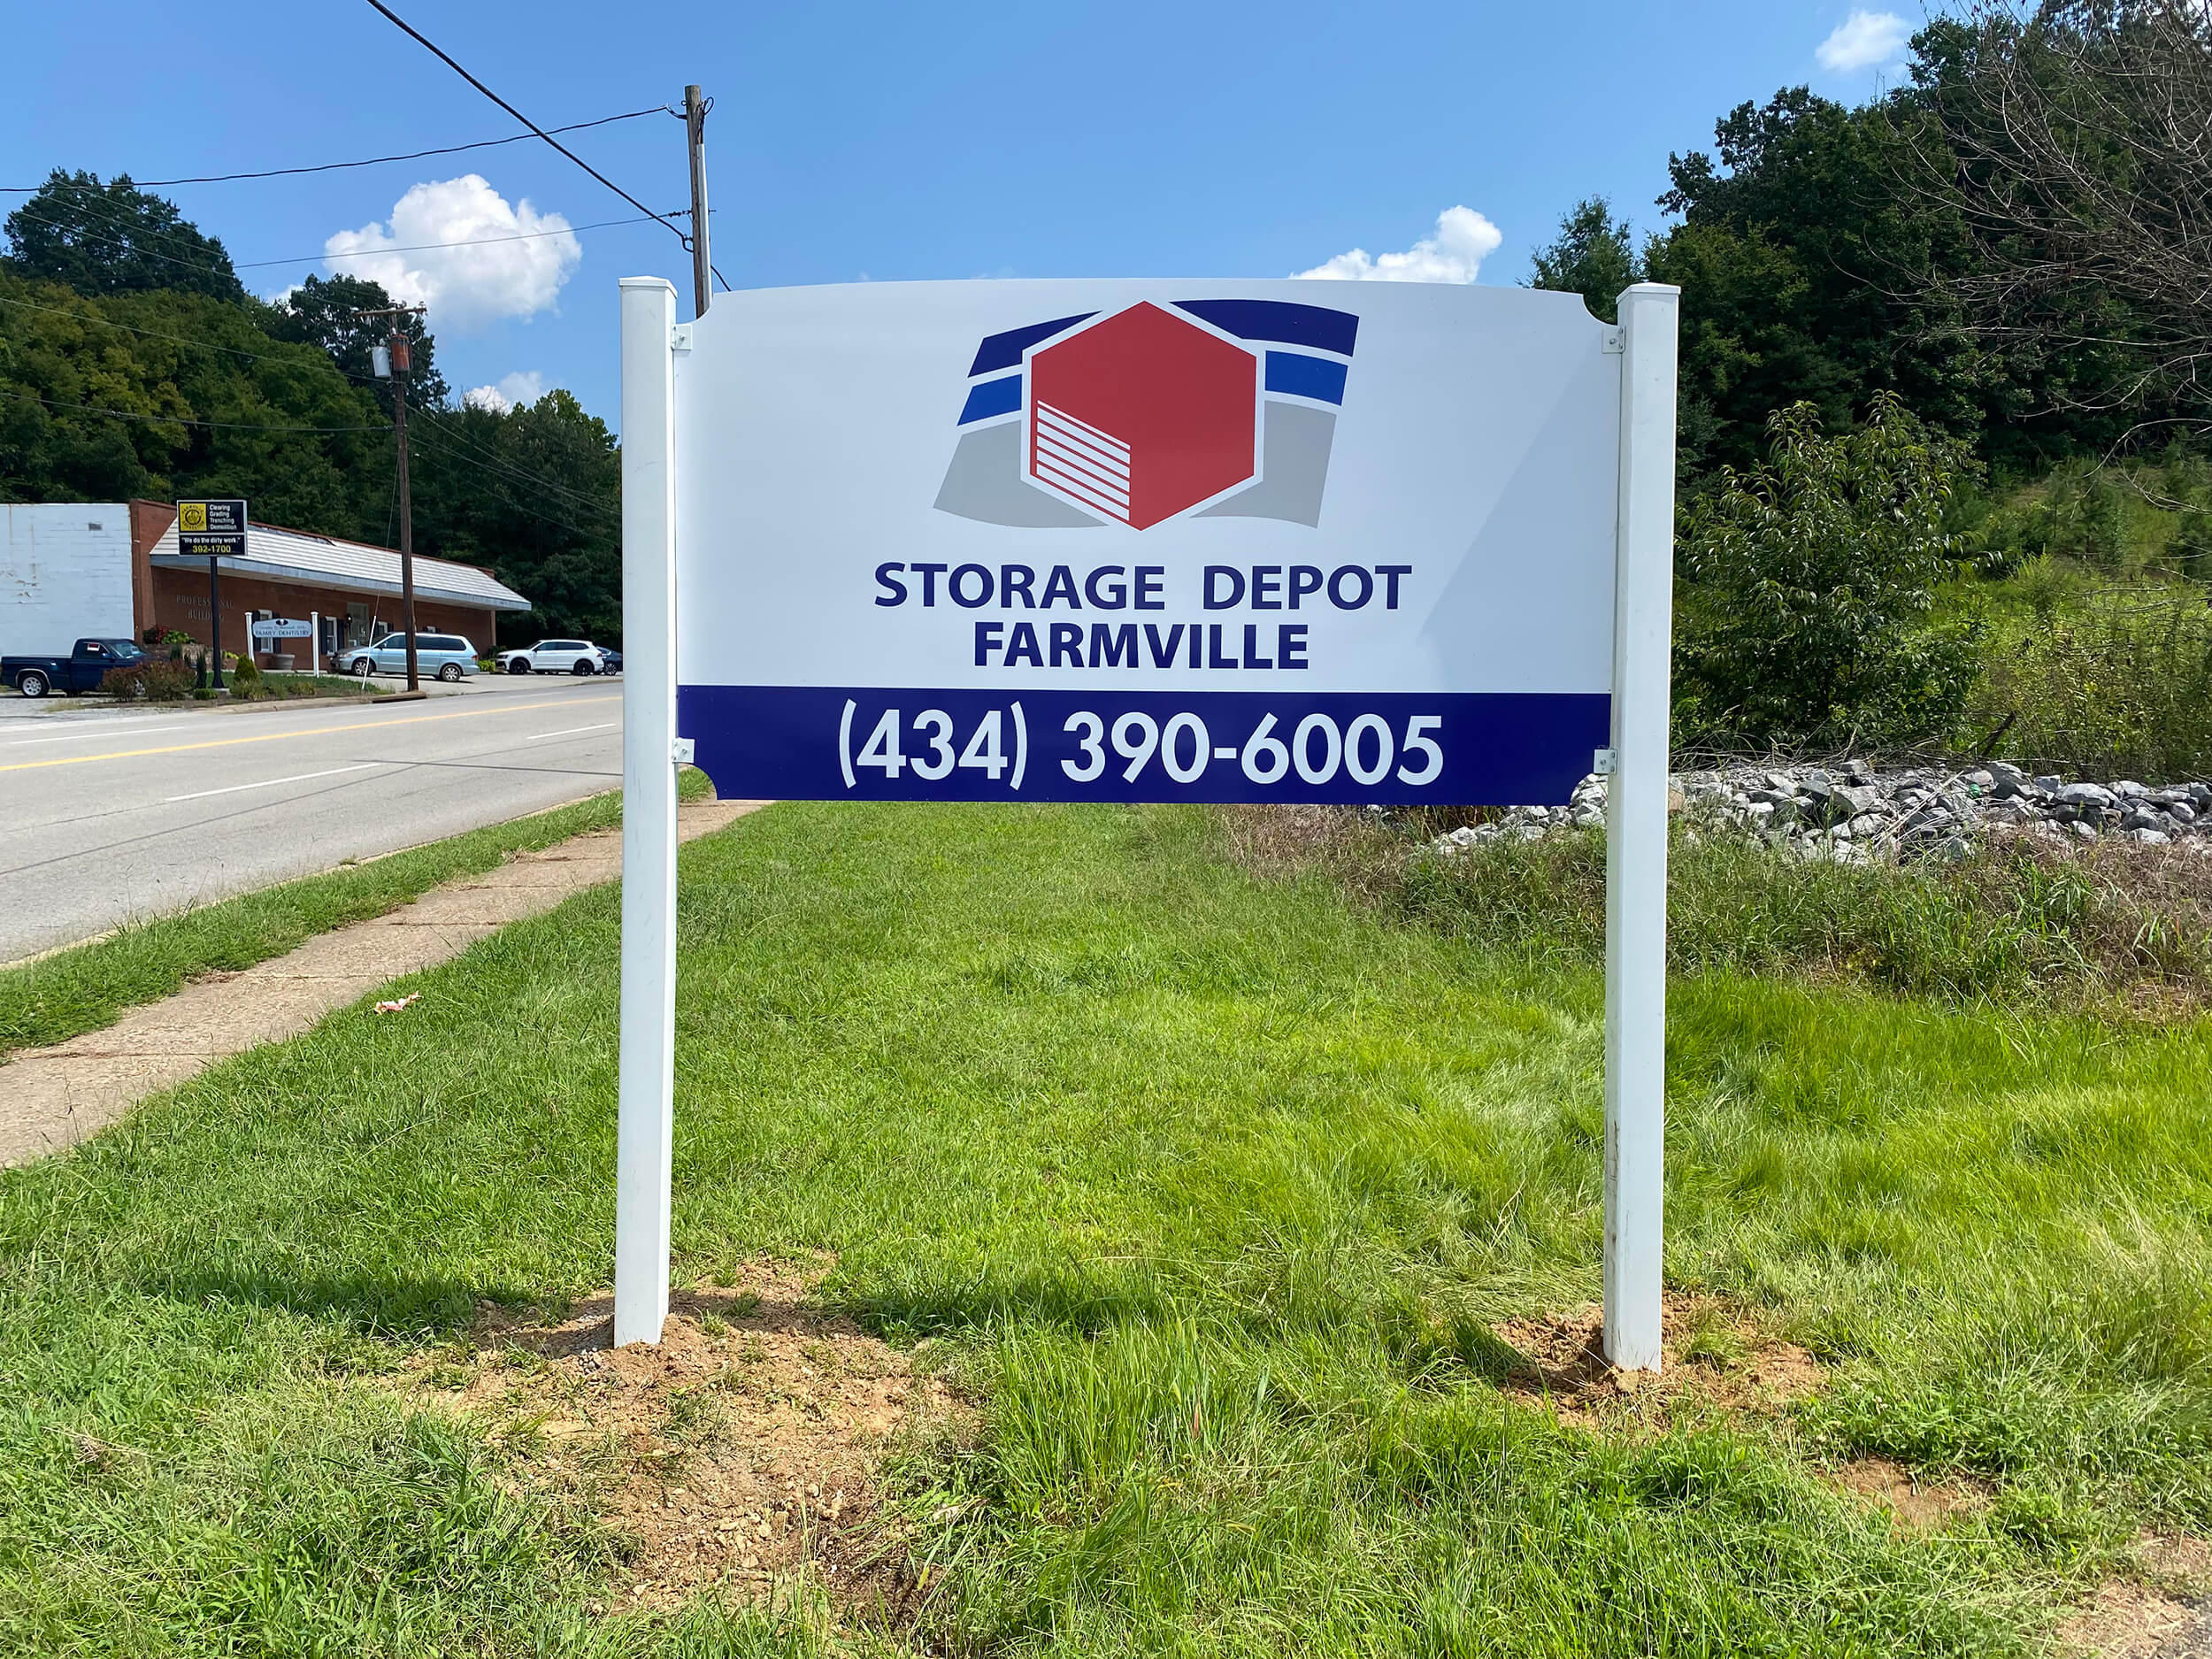 Storage Depot of Farmville - Exterior Signage